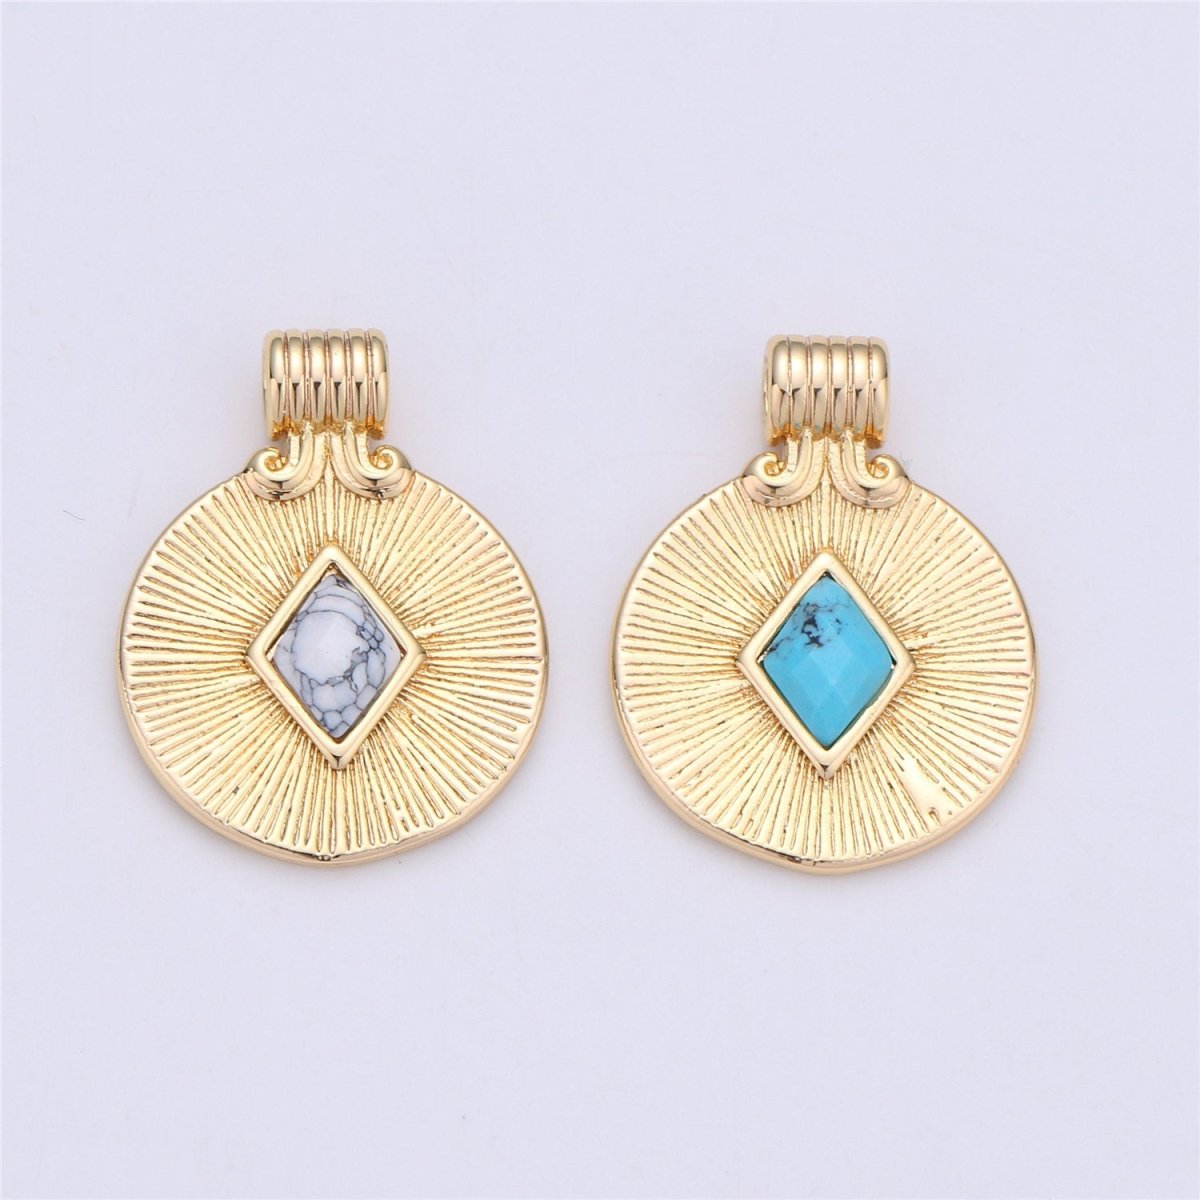 OS Dainty Medallion Pendant - 18K Gold Filled Rhombus Howlite Turquoise Stone Round Disc Charm Necklace Pendant C-742 - DLUXCA